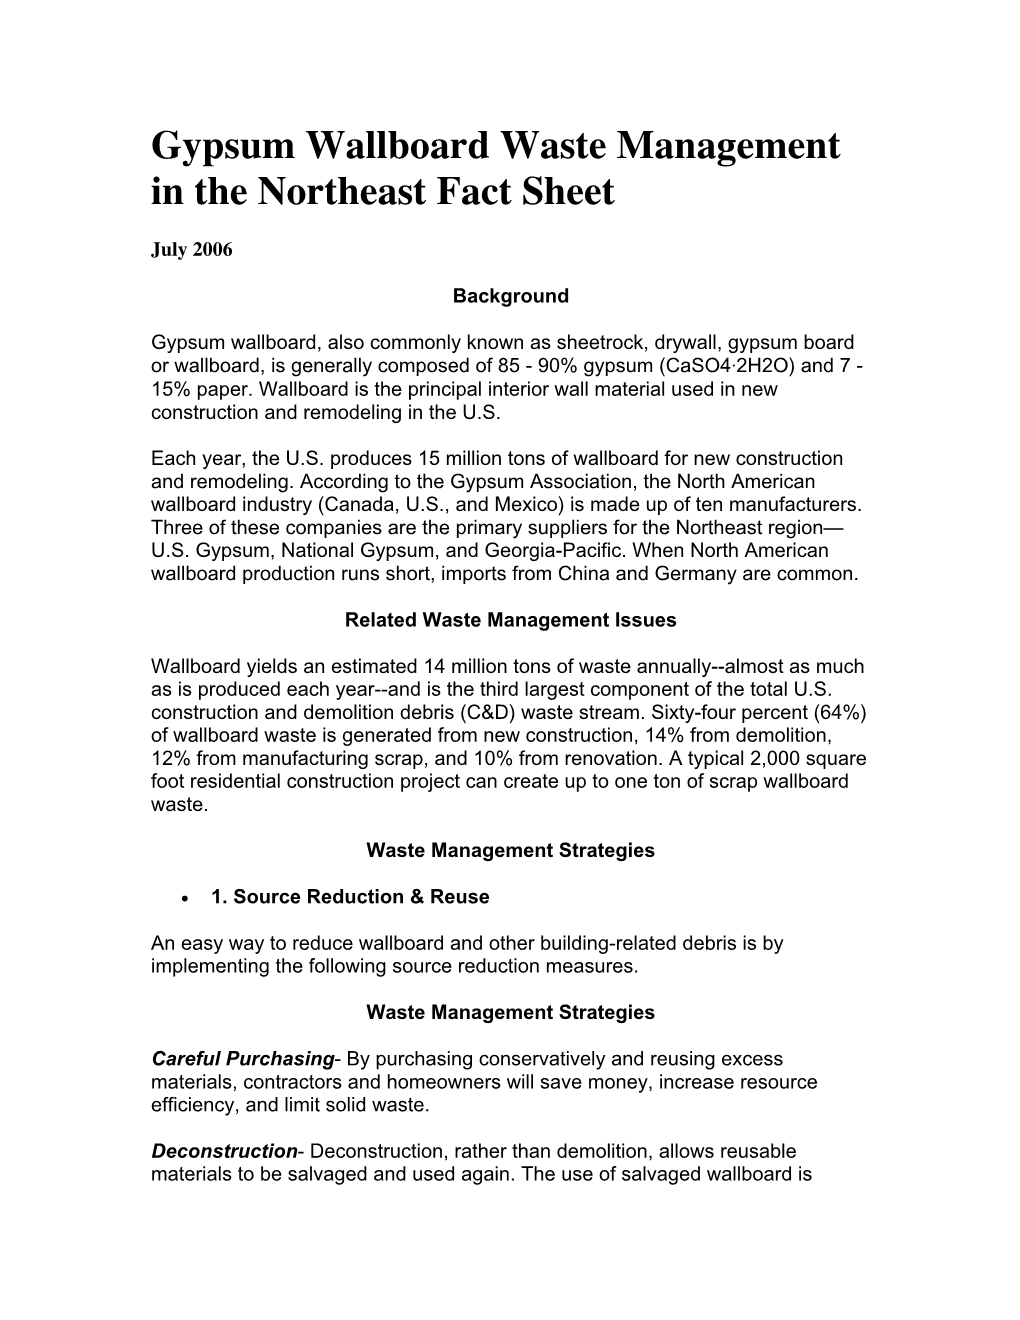 Gypsum Wallboard Waste Management in the Northeast Fact Sheet